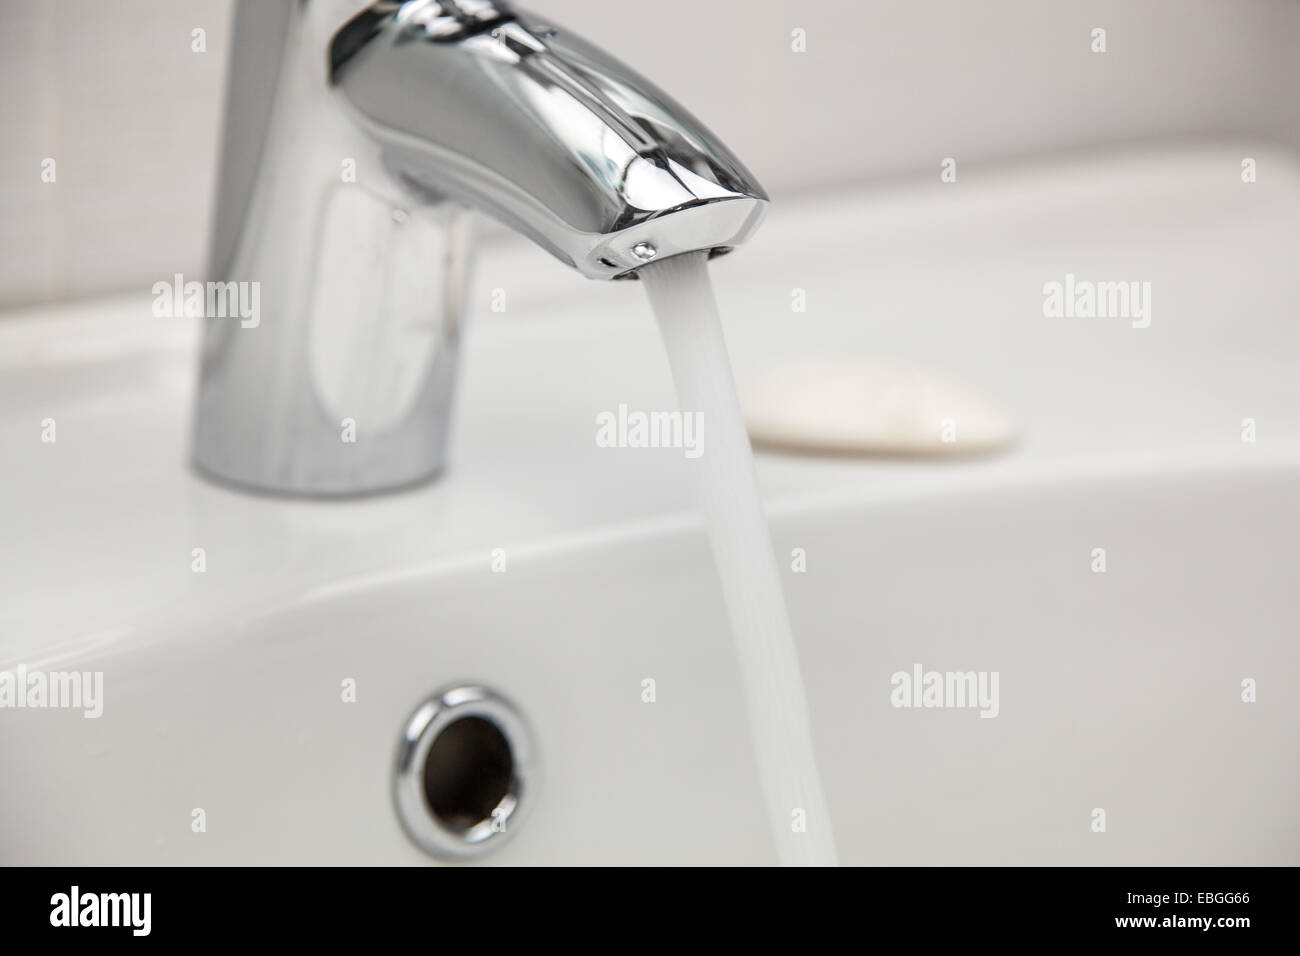 Grifo de agua del grifo con agua fluyendo en un lavabo blanco. Foto de stock